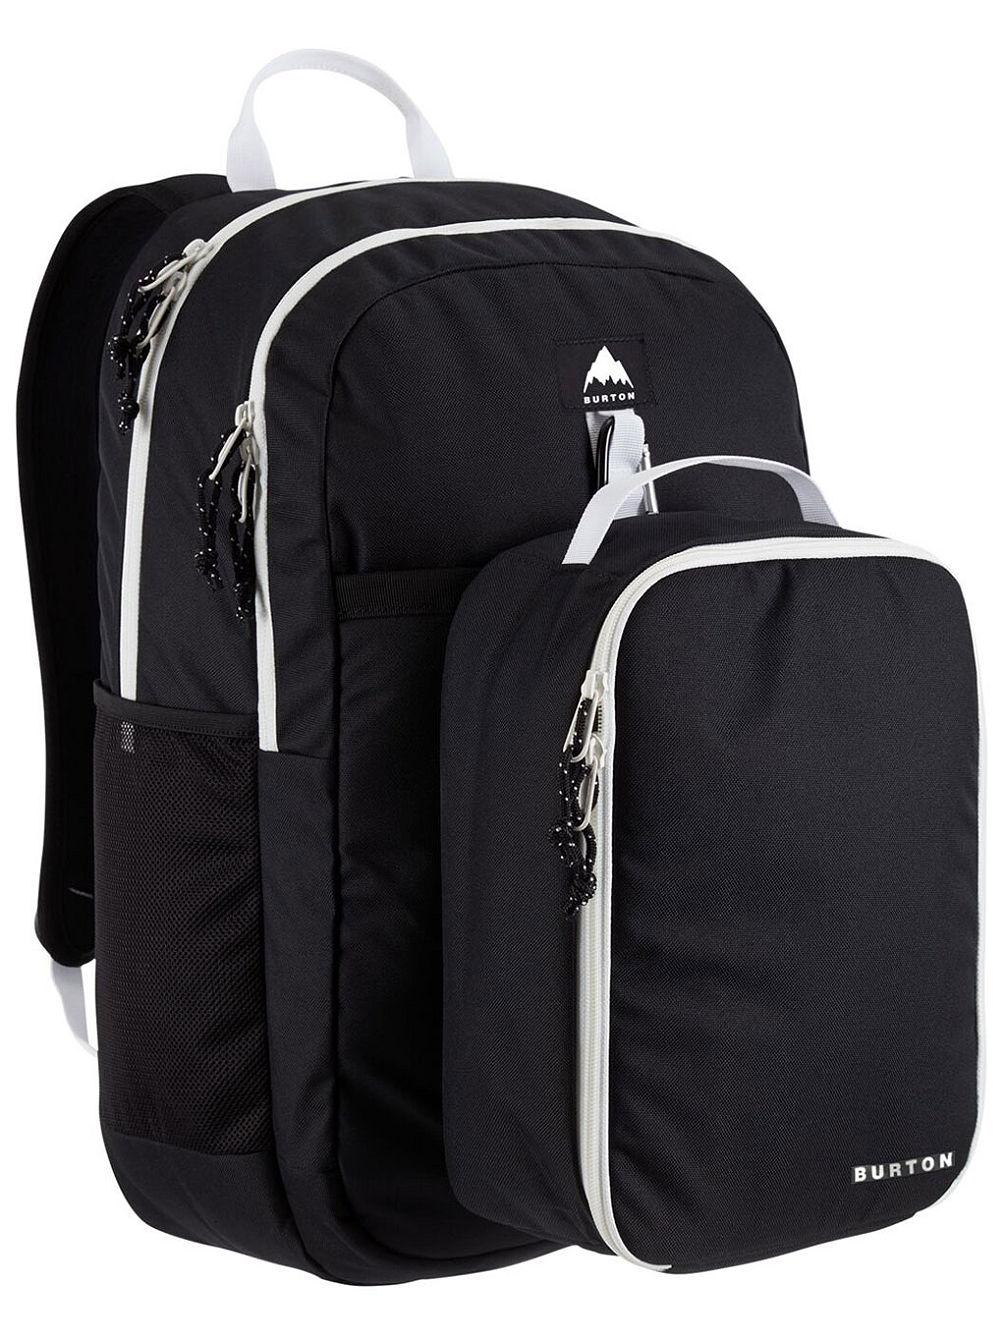 Lunch-N-Pack Backpack